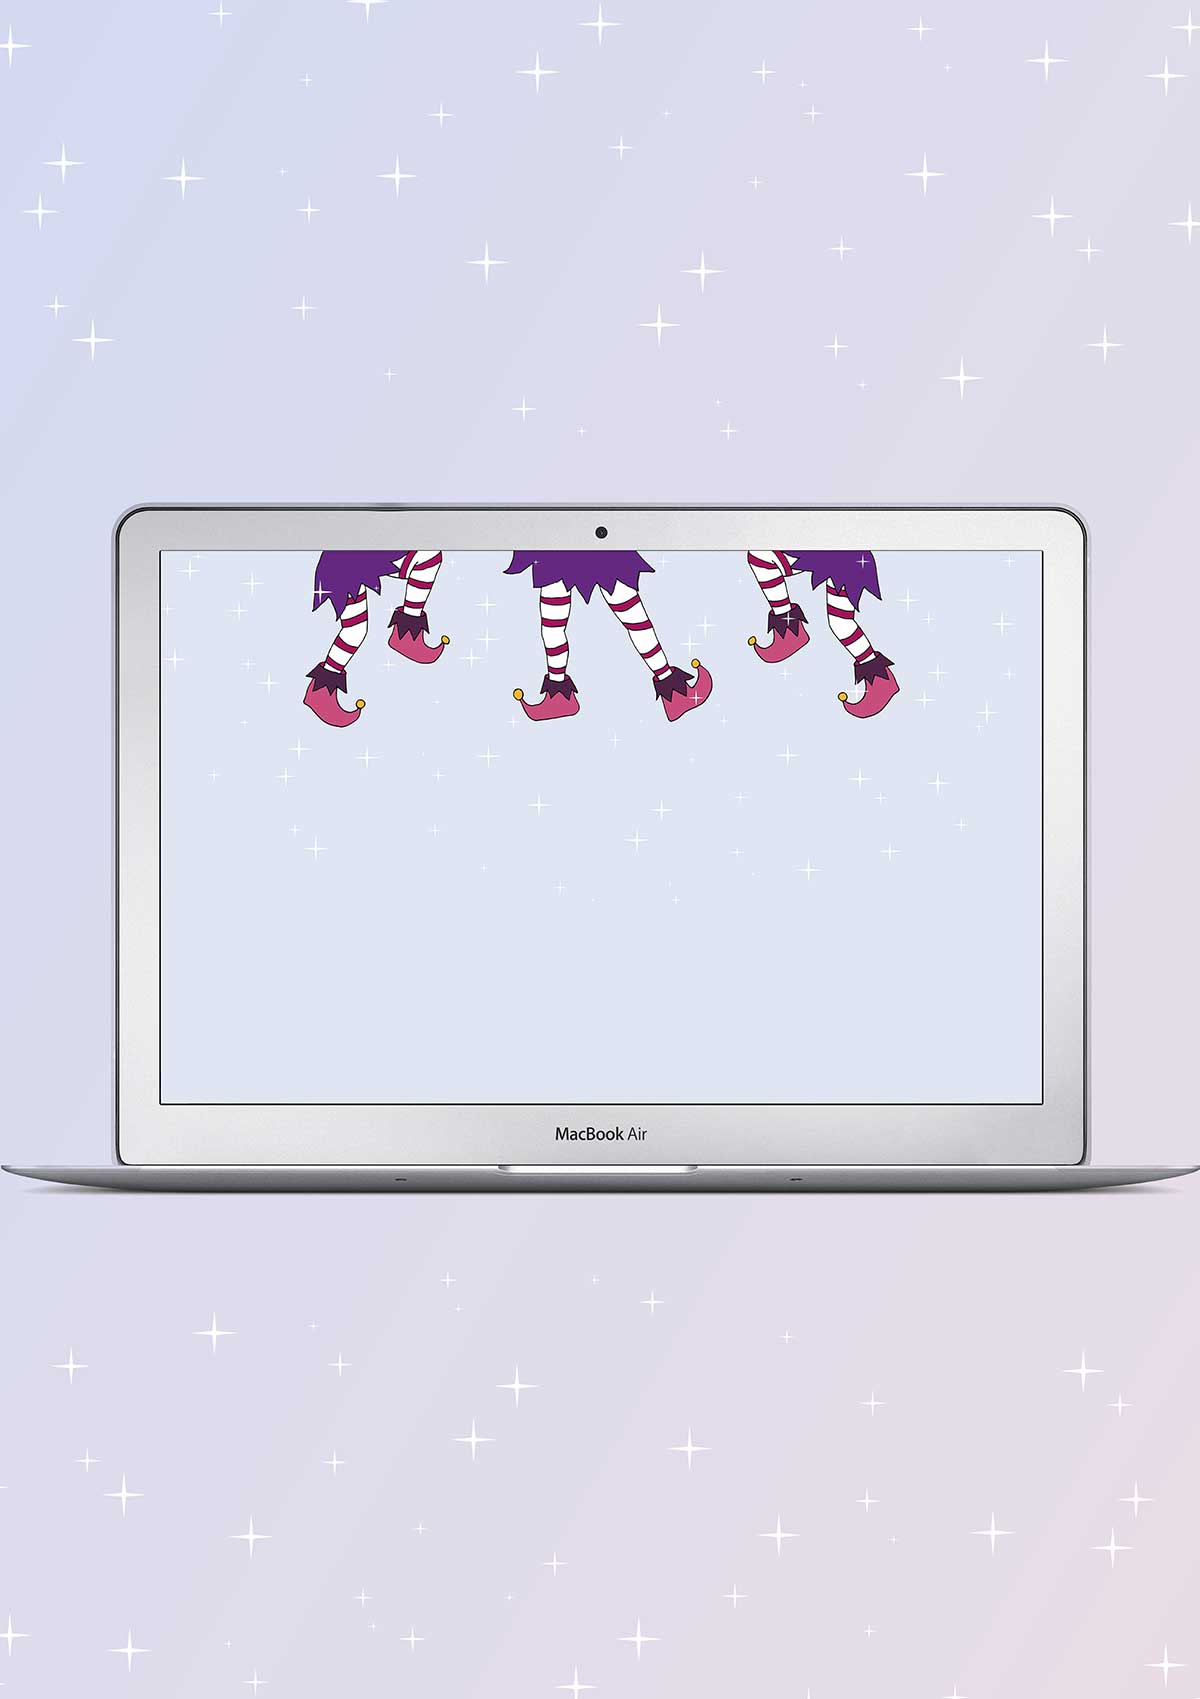 Elf desktop wallpaper - free download for Christmas!